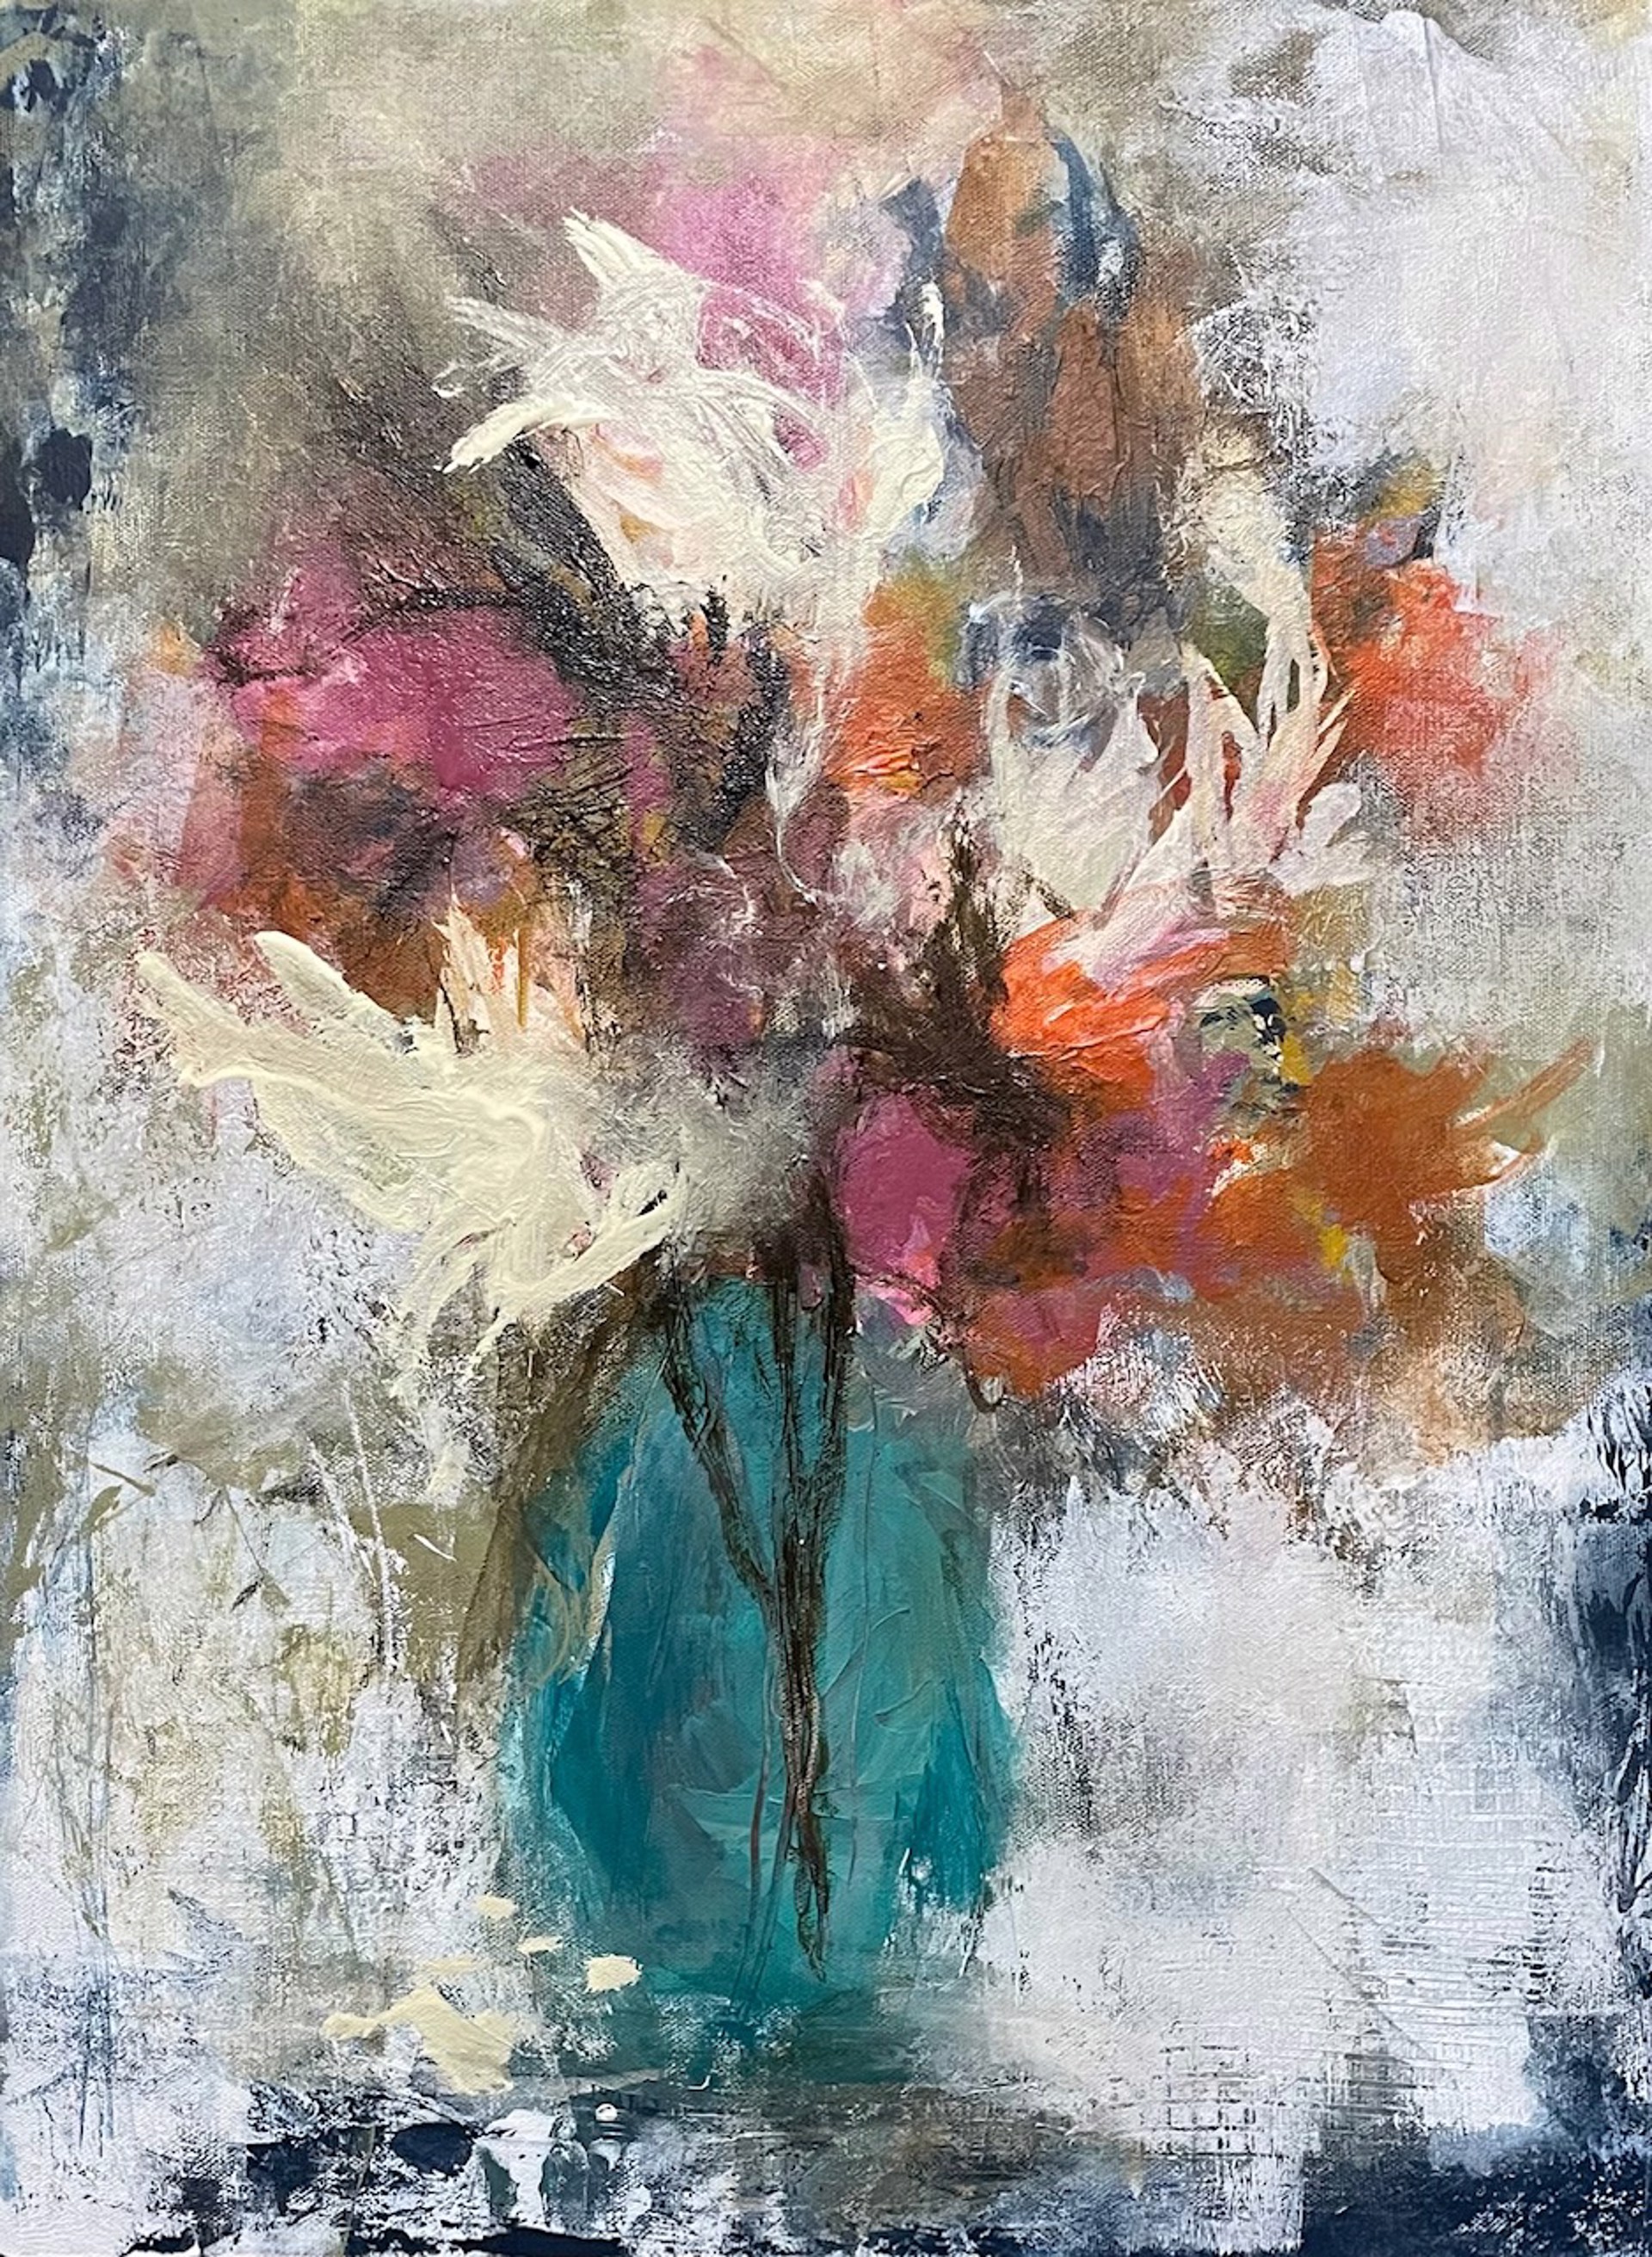 Tuesday's Flowers by Stephanie Garber